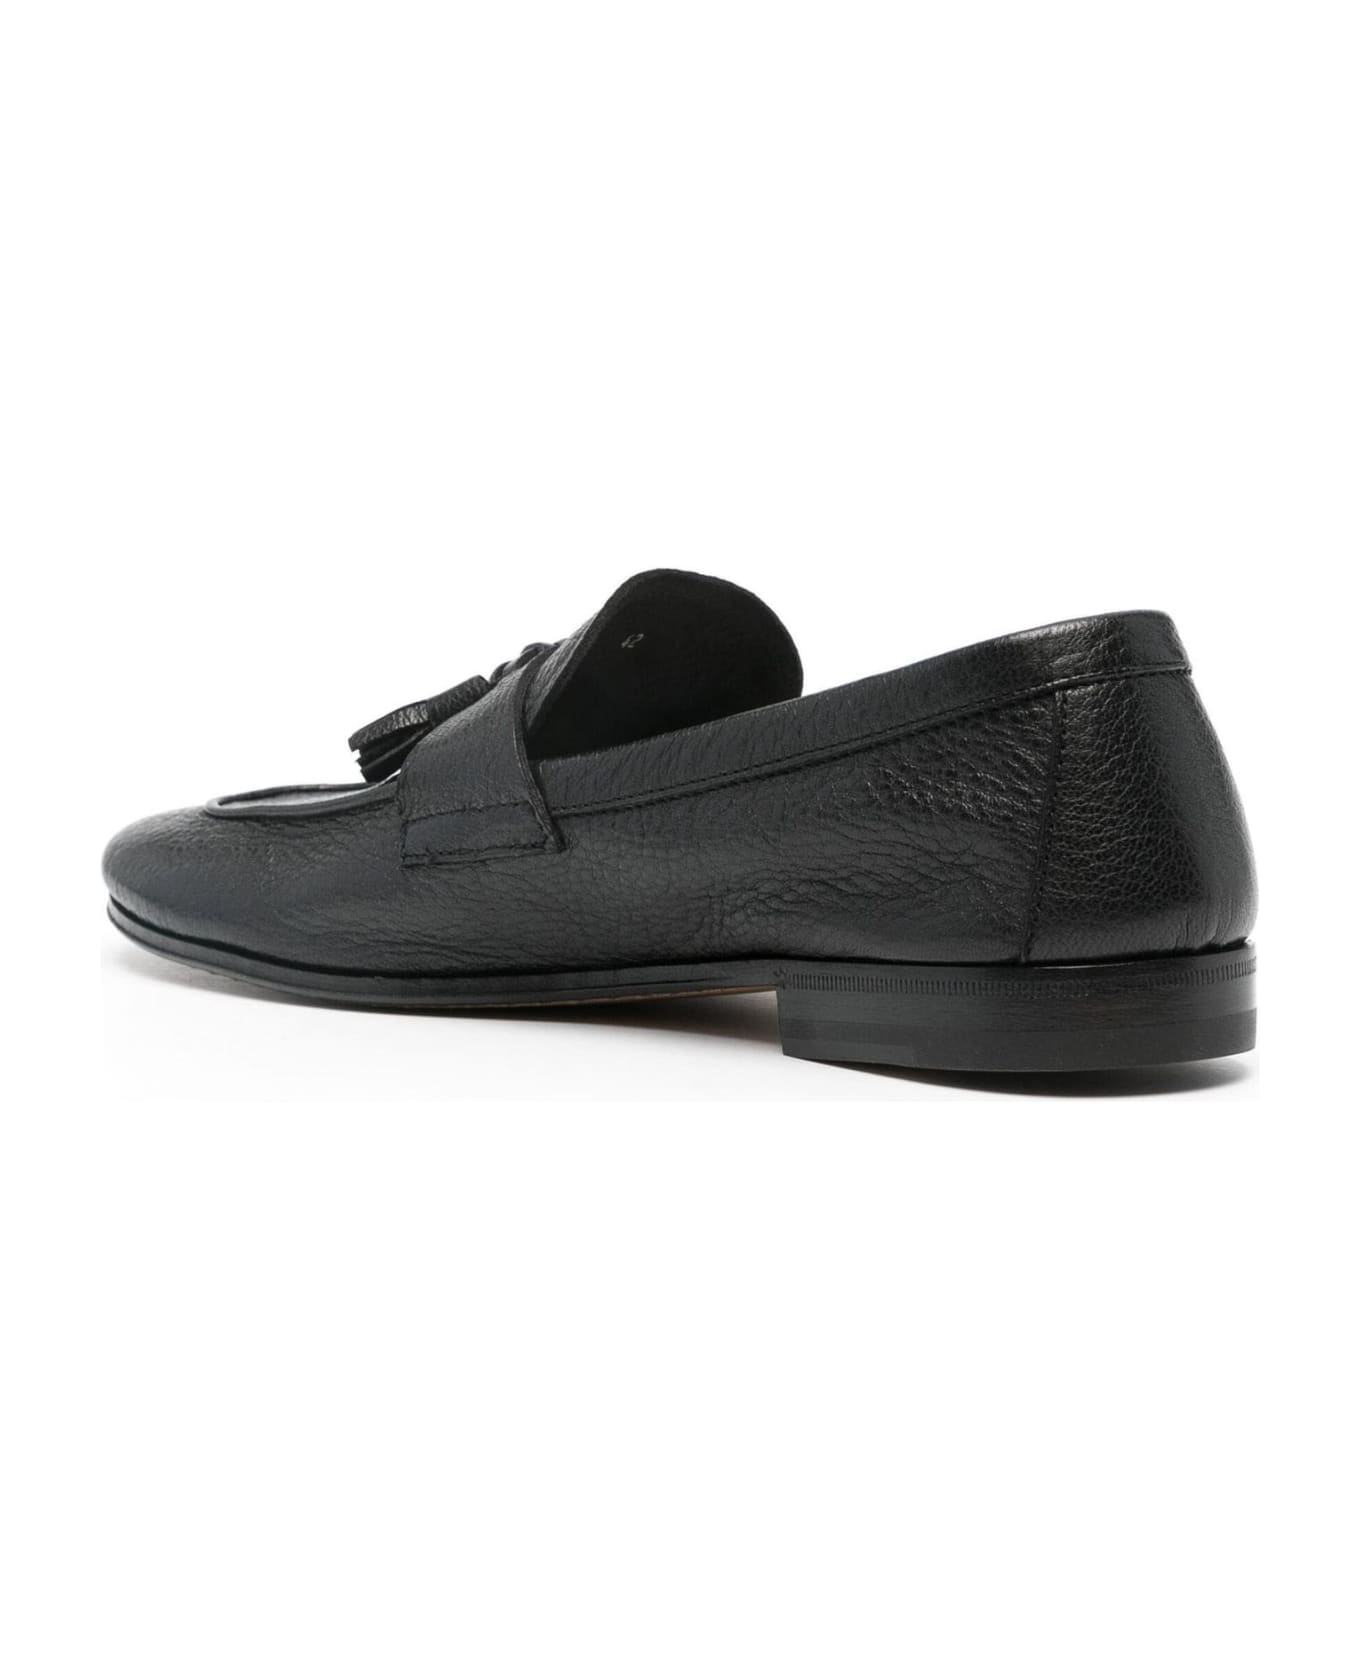 Henderson Baracco Henderson Flat Shoes Black - Black